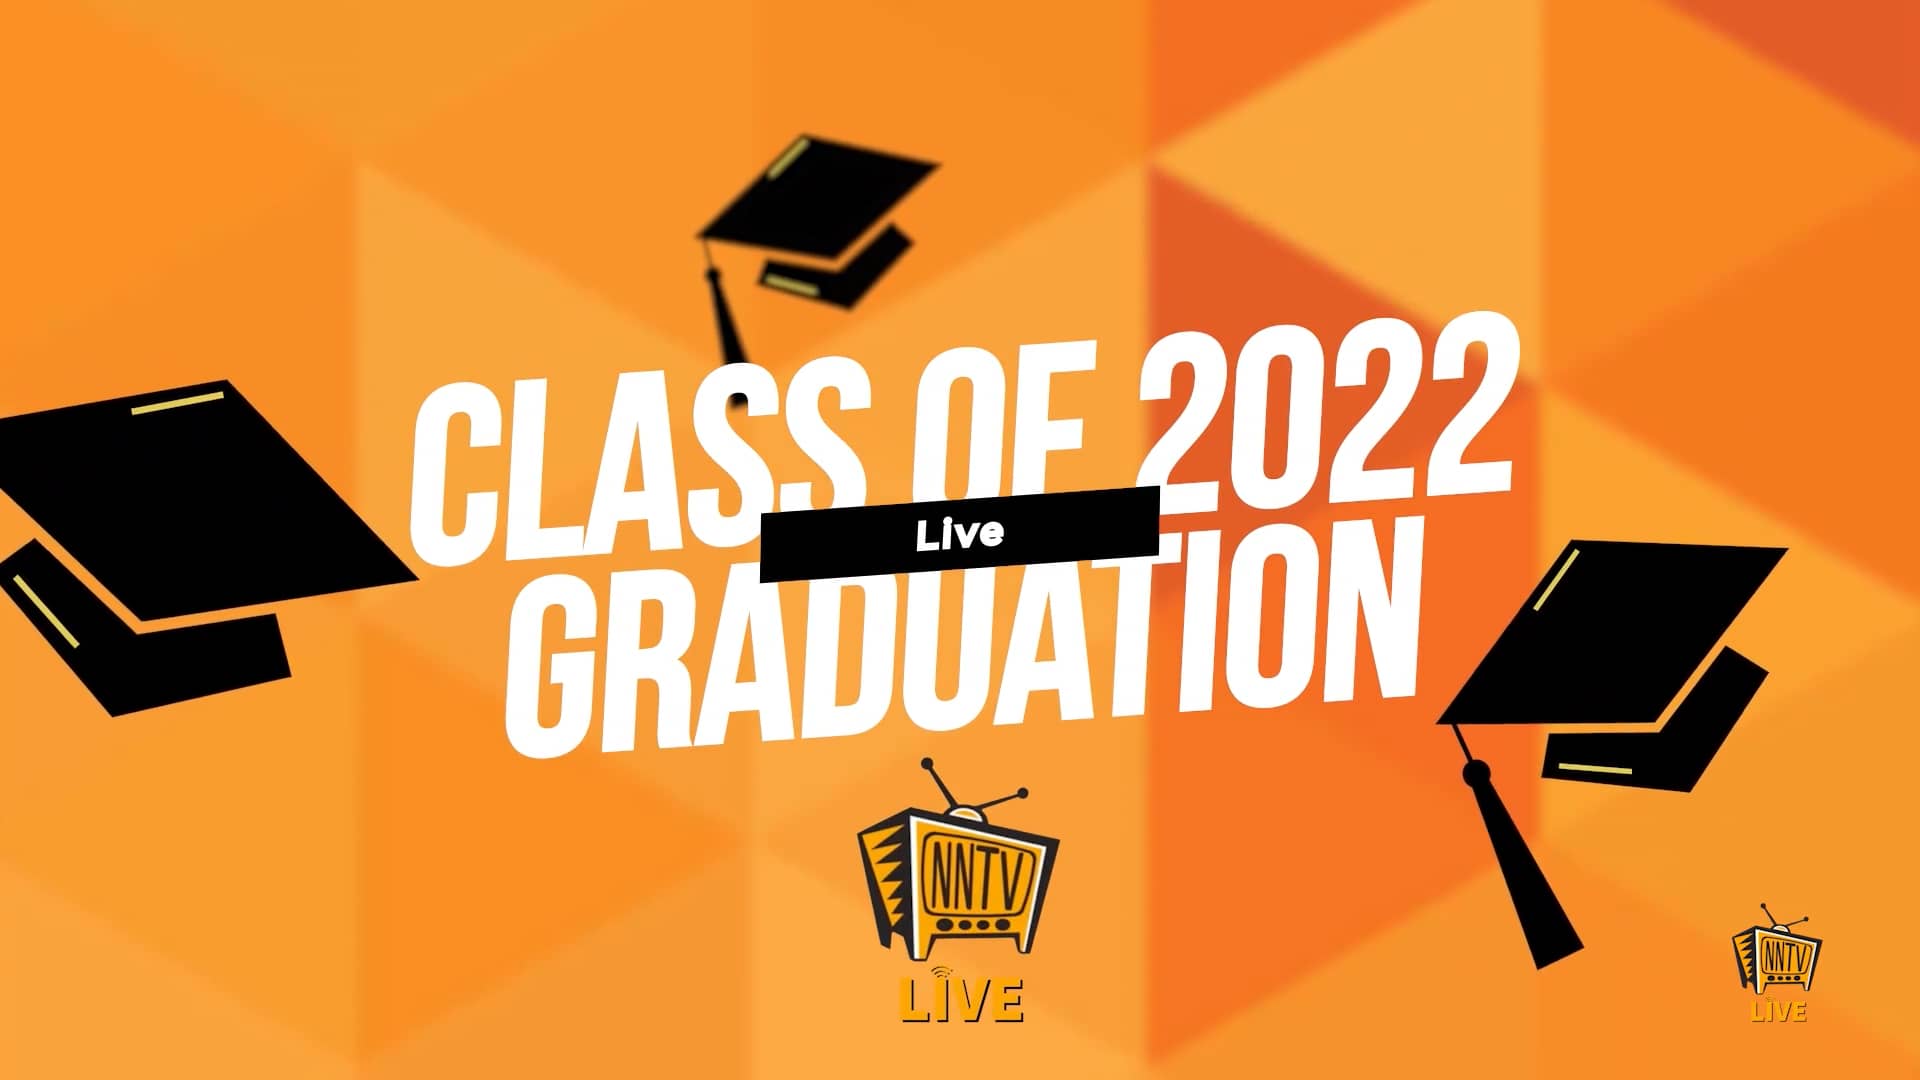 Newton North High School Graduation 2022 on Vimeo